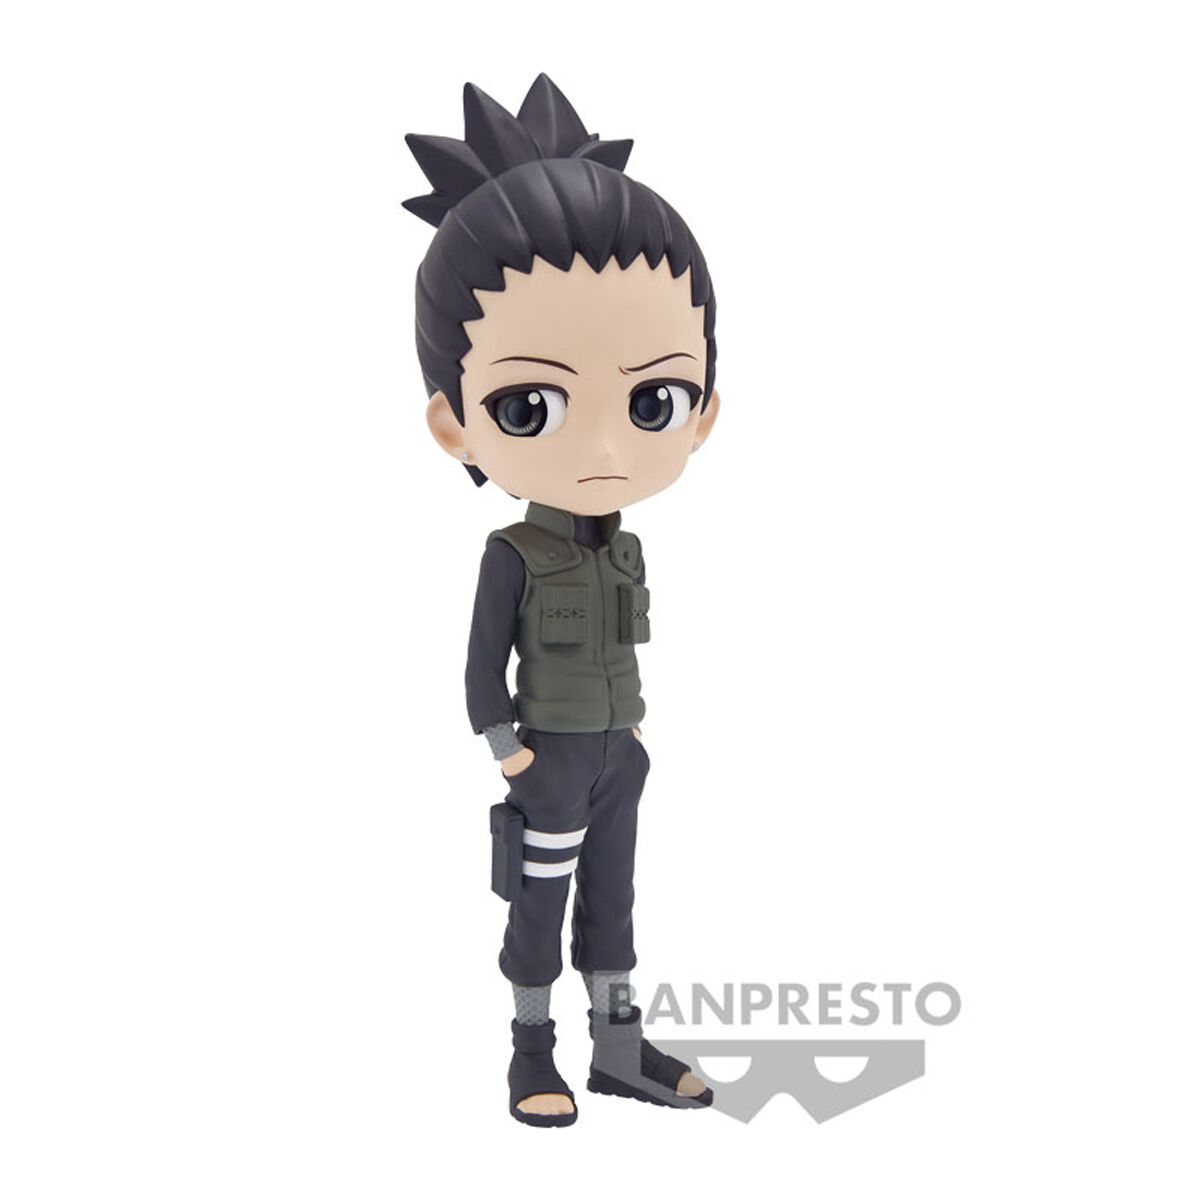 Naruto Shippuden- Banpresto - Nara Shikamaru (Ver. A) Q Posket Figur Sammelfiguren multicolor